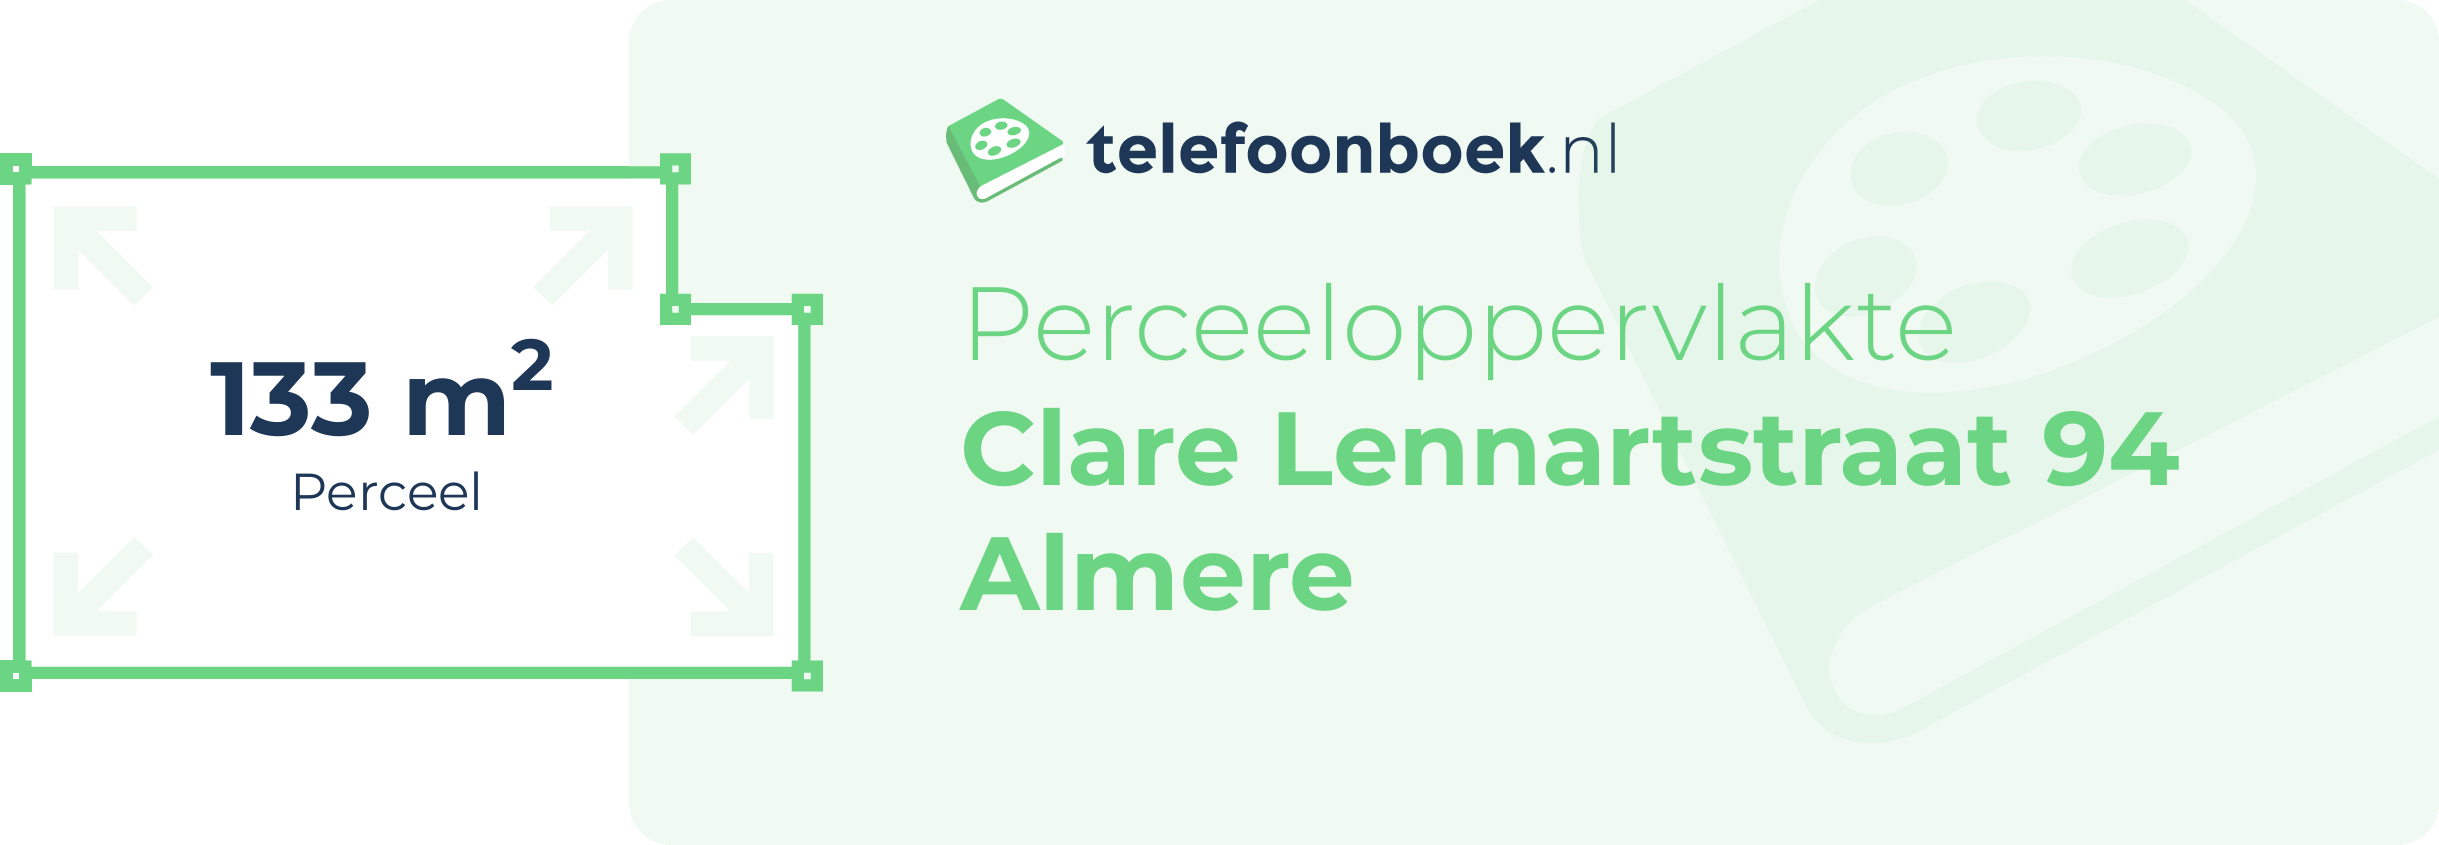 Perceeloppervlakte Clare Lennartstraat 94 Almere